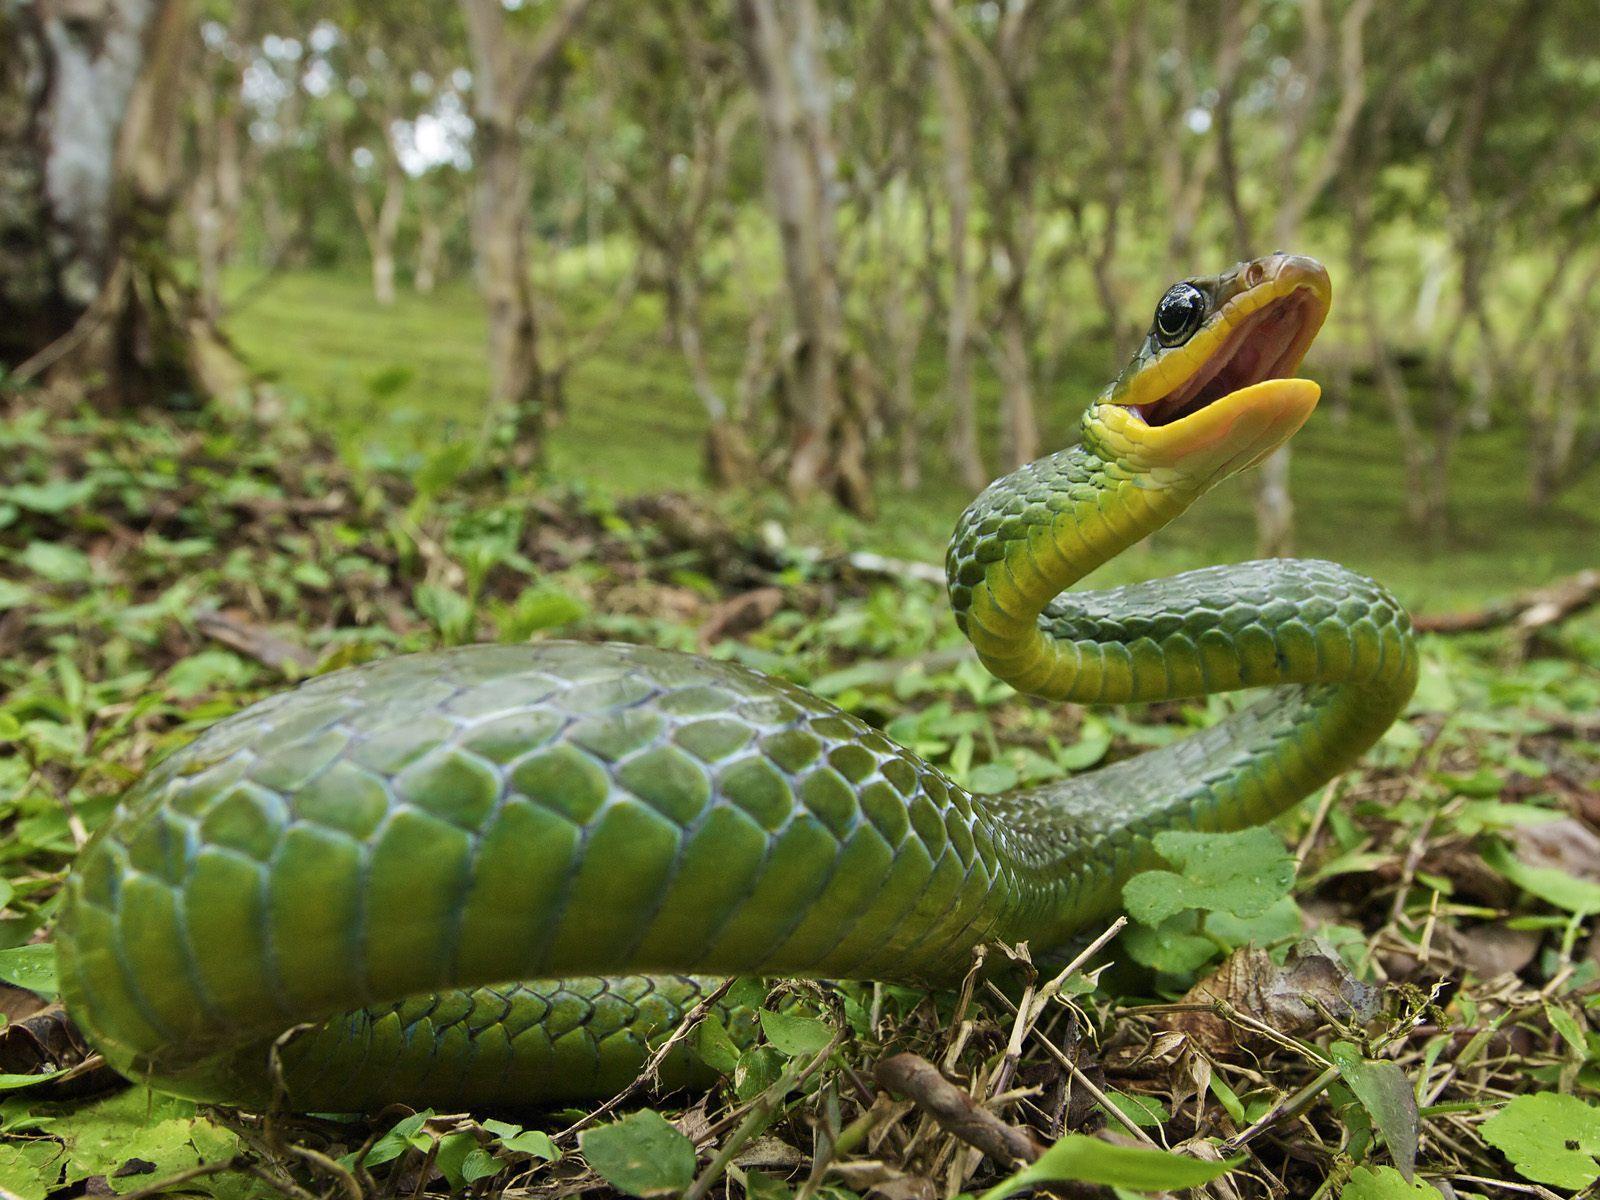 Poisonous Snake Bites HD Wallpaper, Background Image